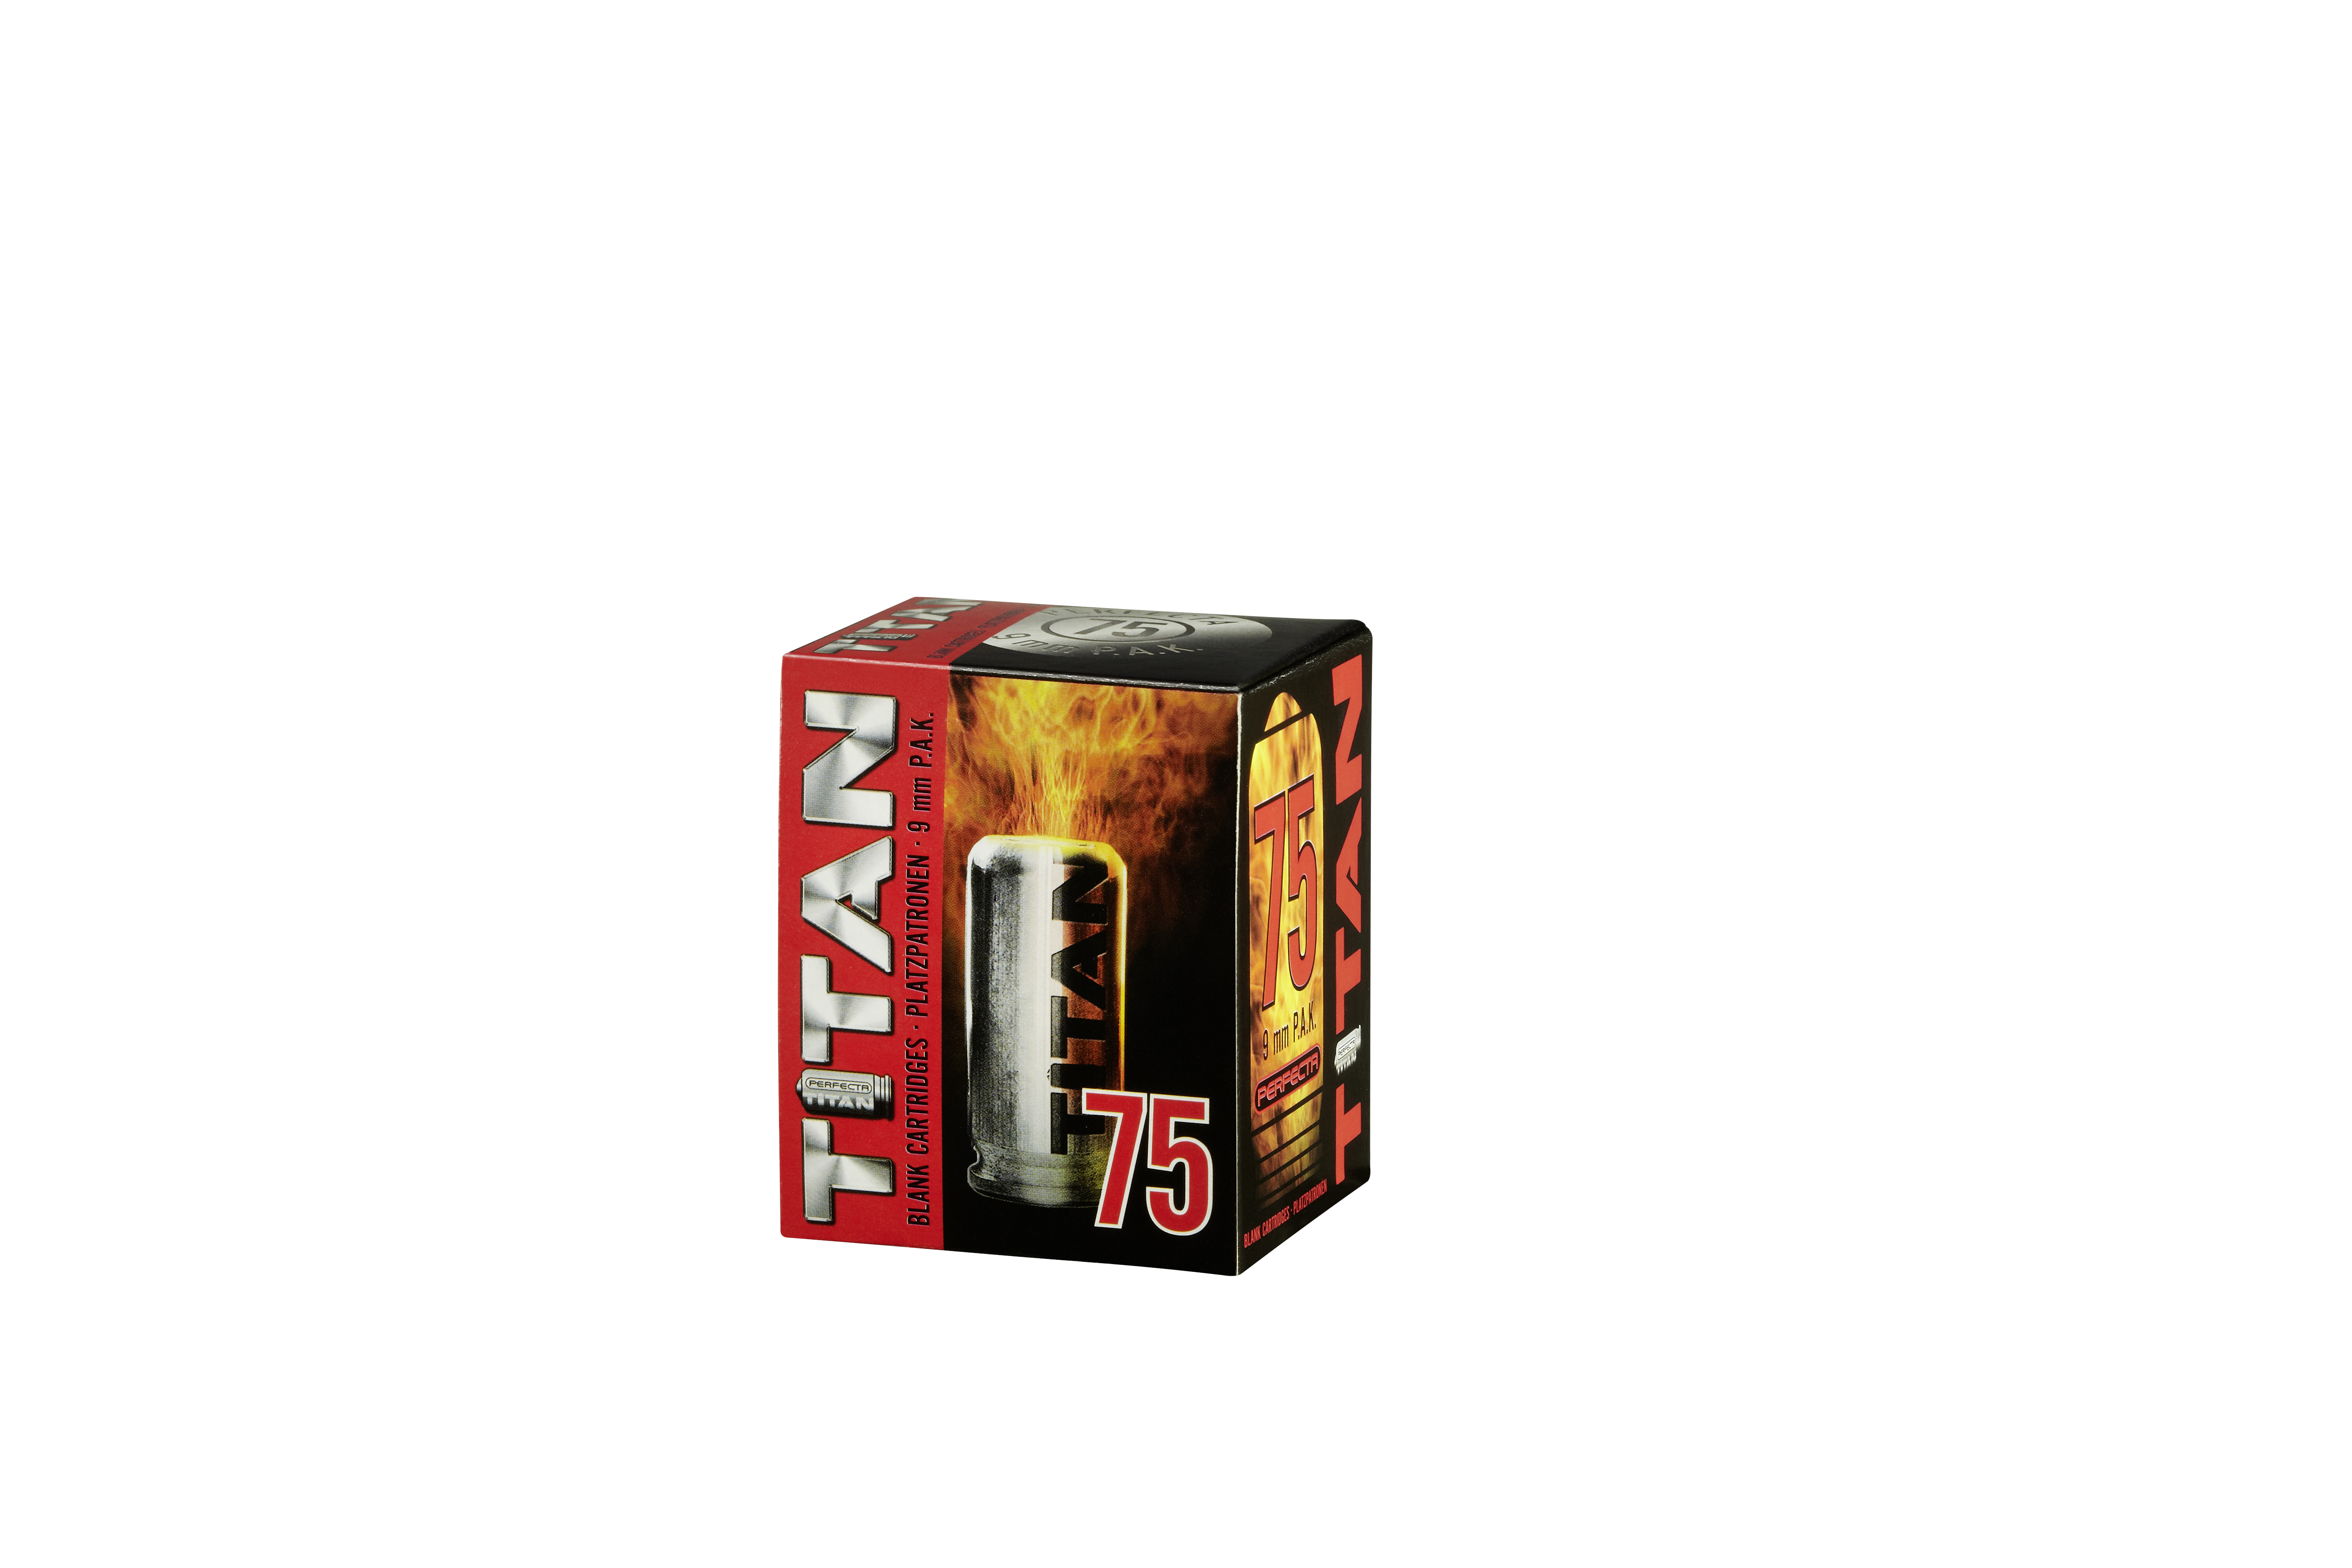 PERFECTA (Umarex) Blank Cartridges Titan 9mm P.A.K.